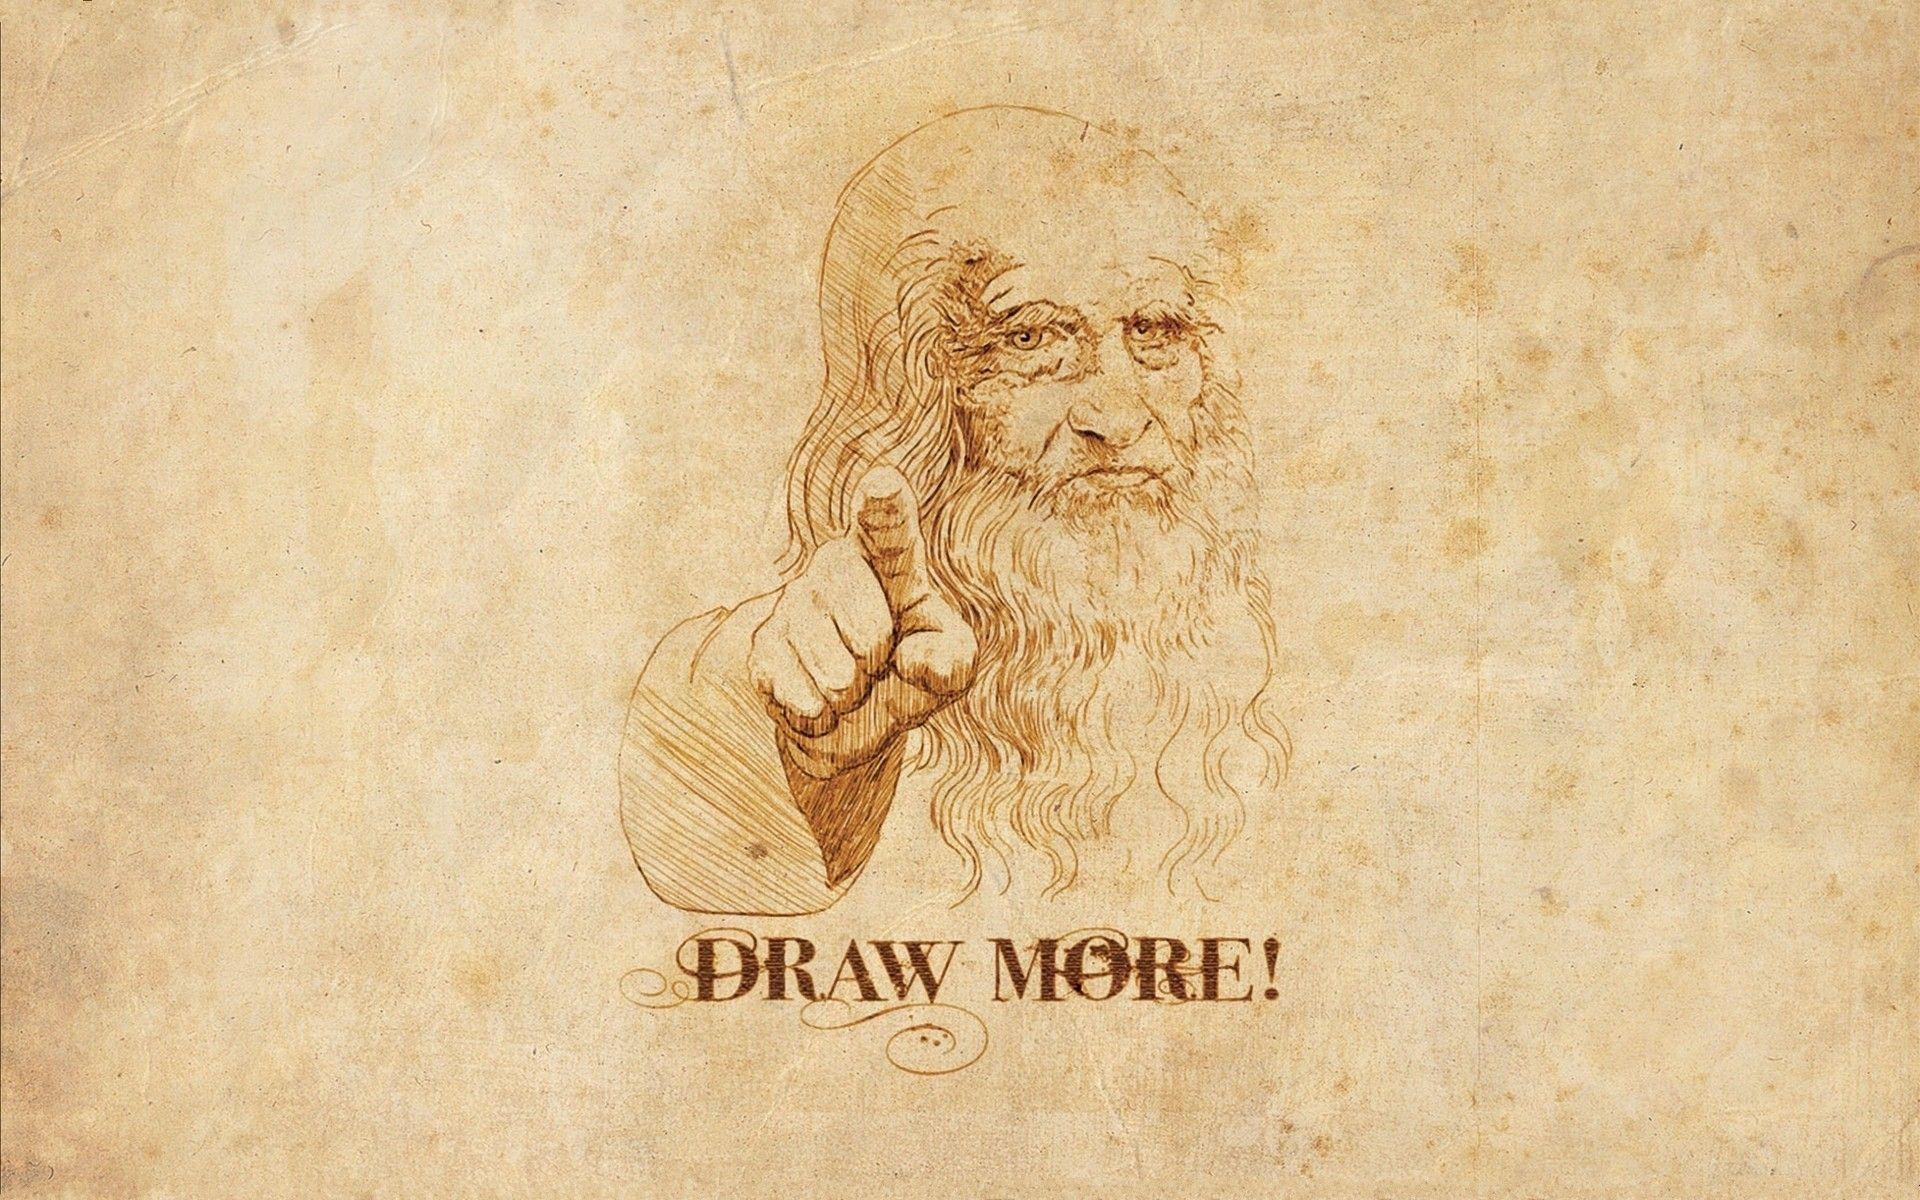 humor, Leonardo da Vinci (1920x1200px) on Wallls.com